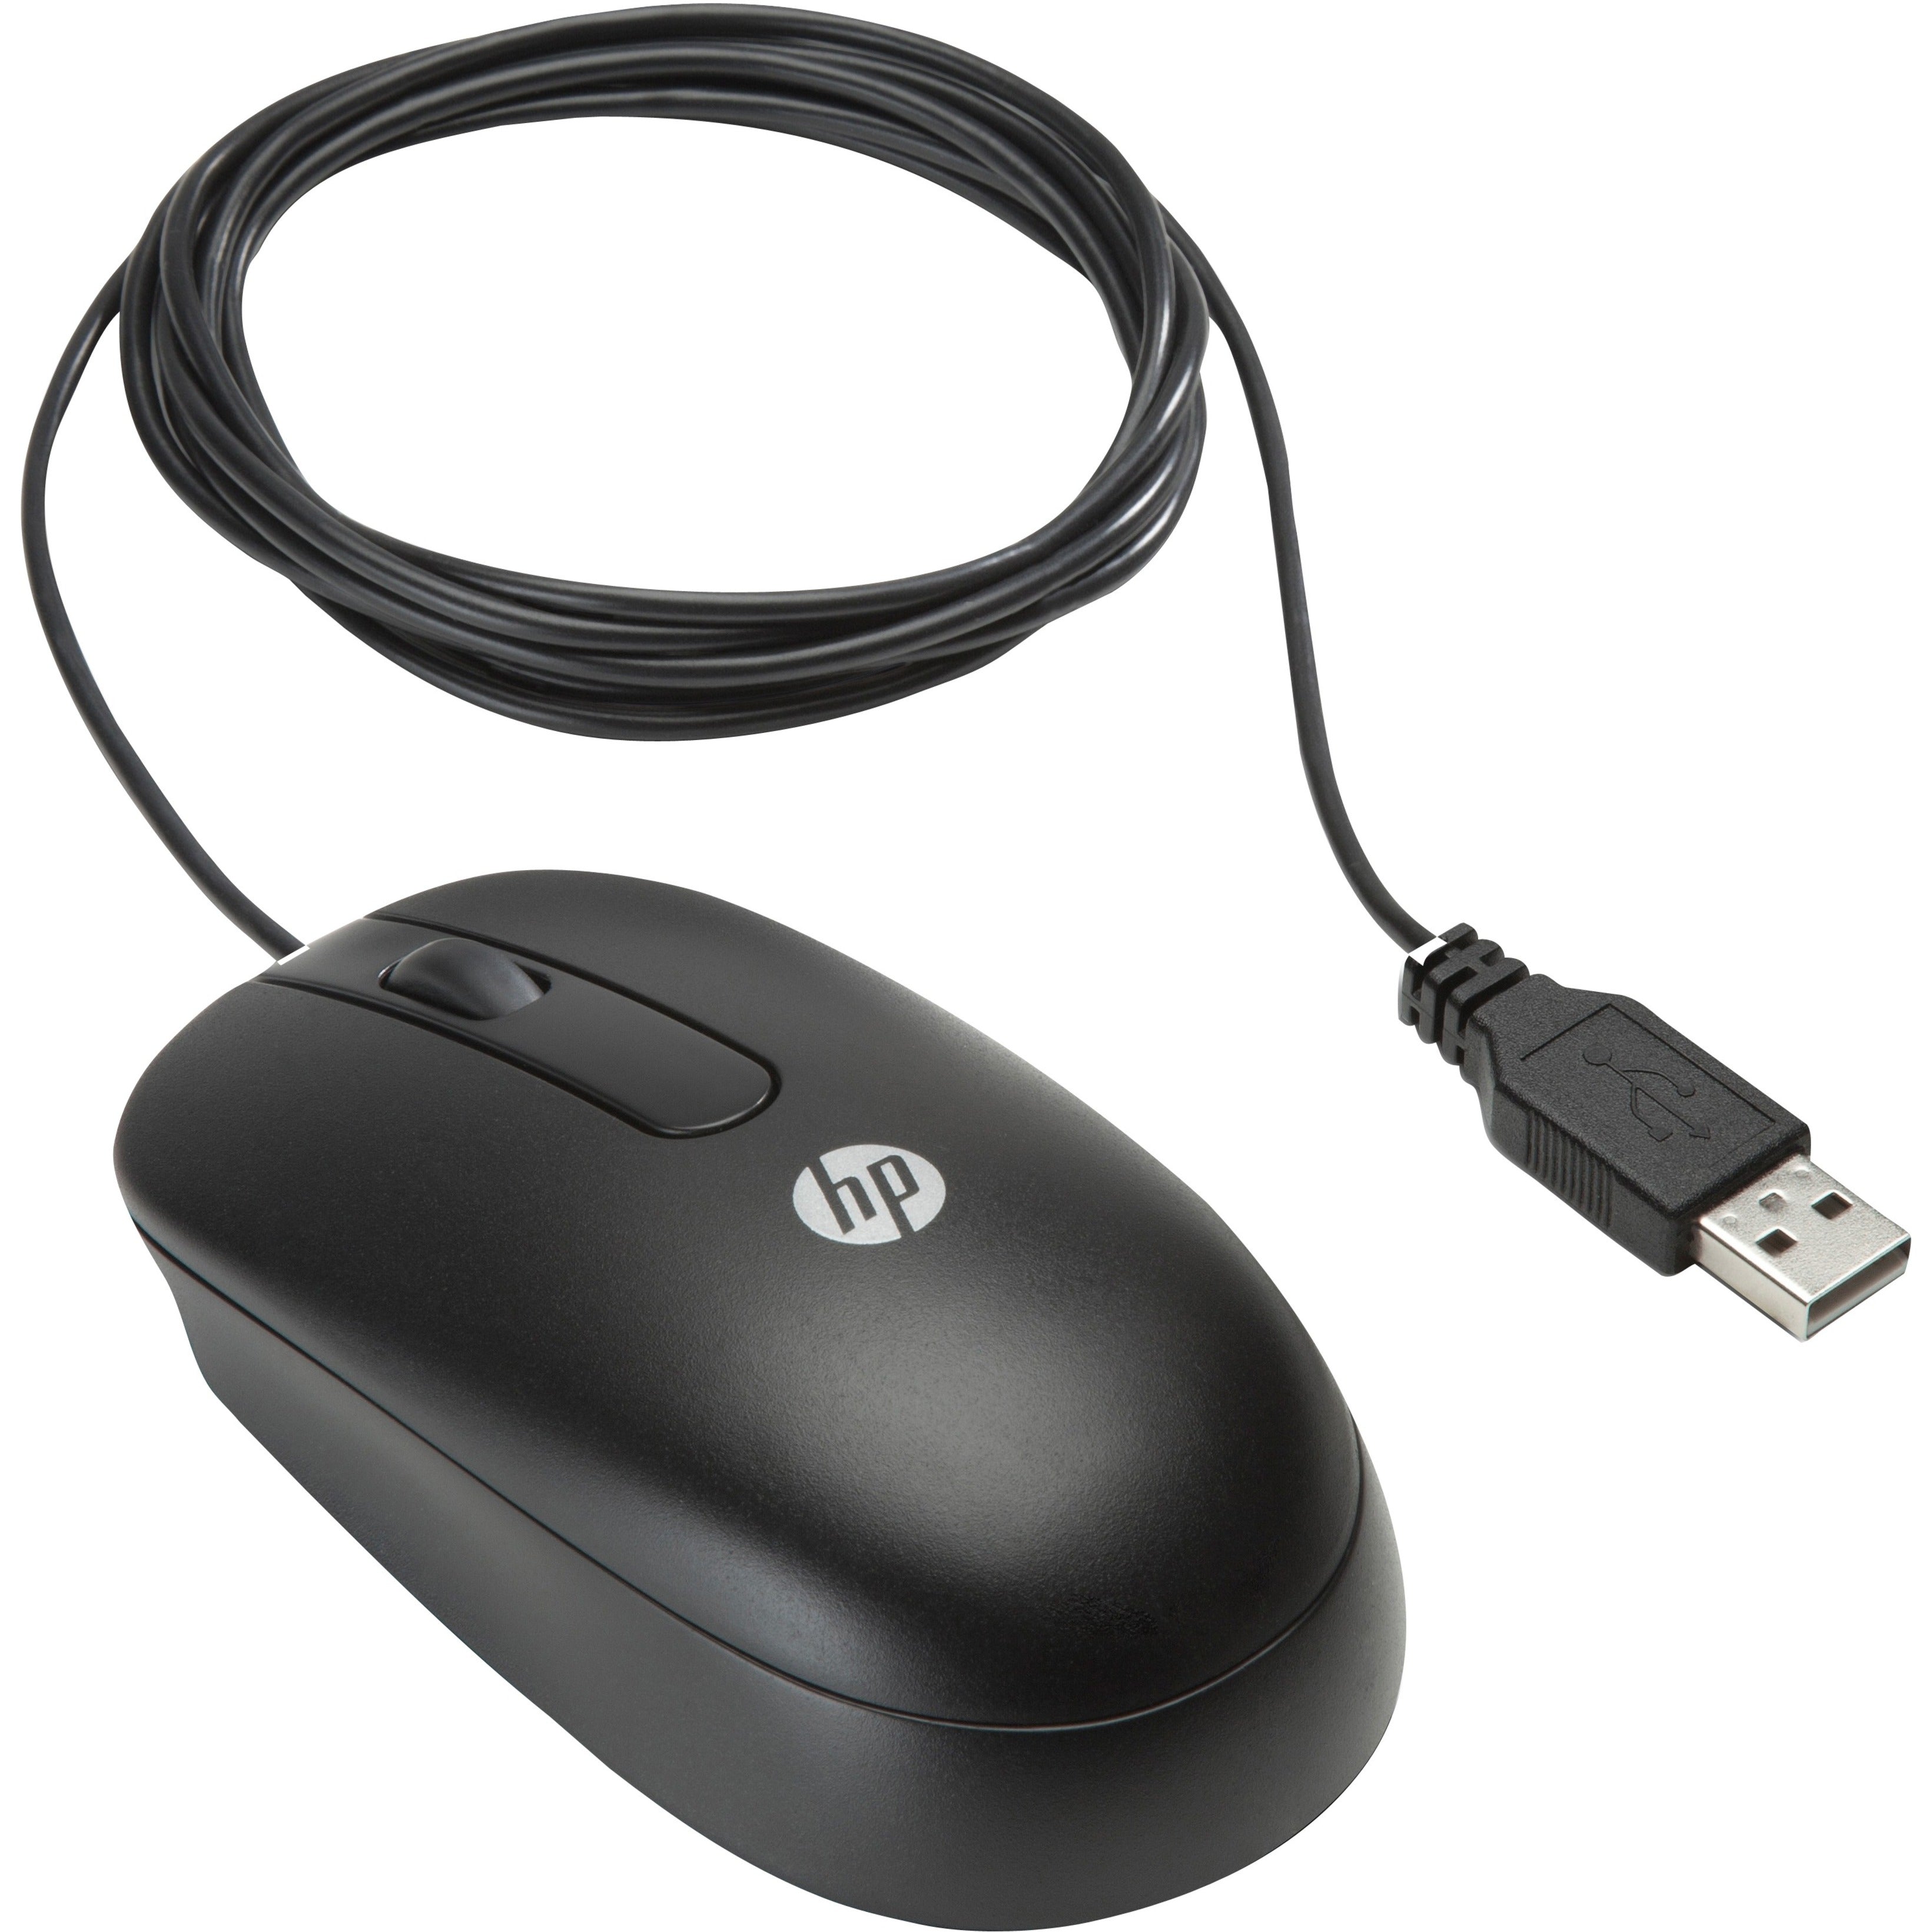 HP H4B81AA 3-Button USB Laser Mouse, Ergonomic Fit, Scroll Wheel, Symmetrical Design